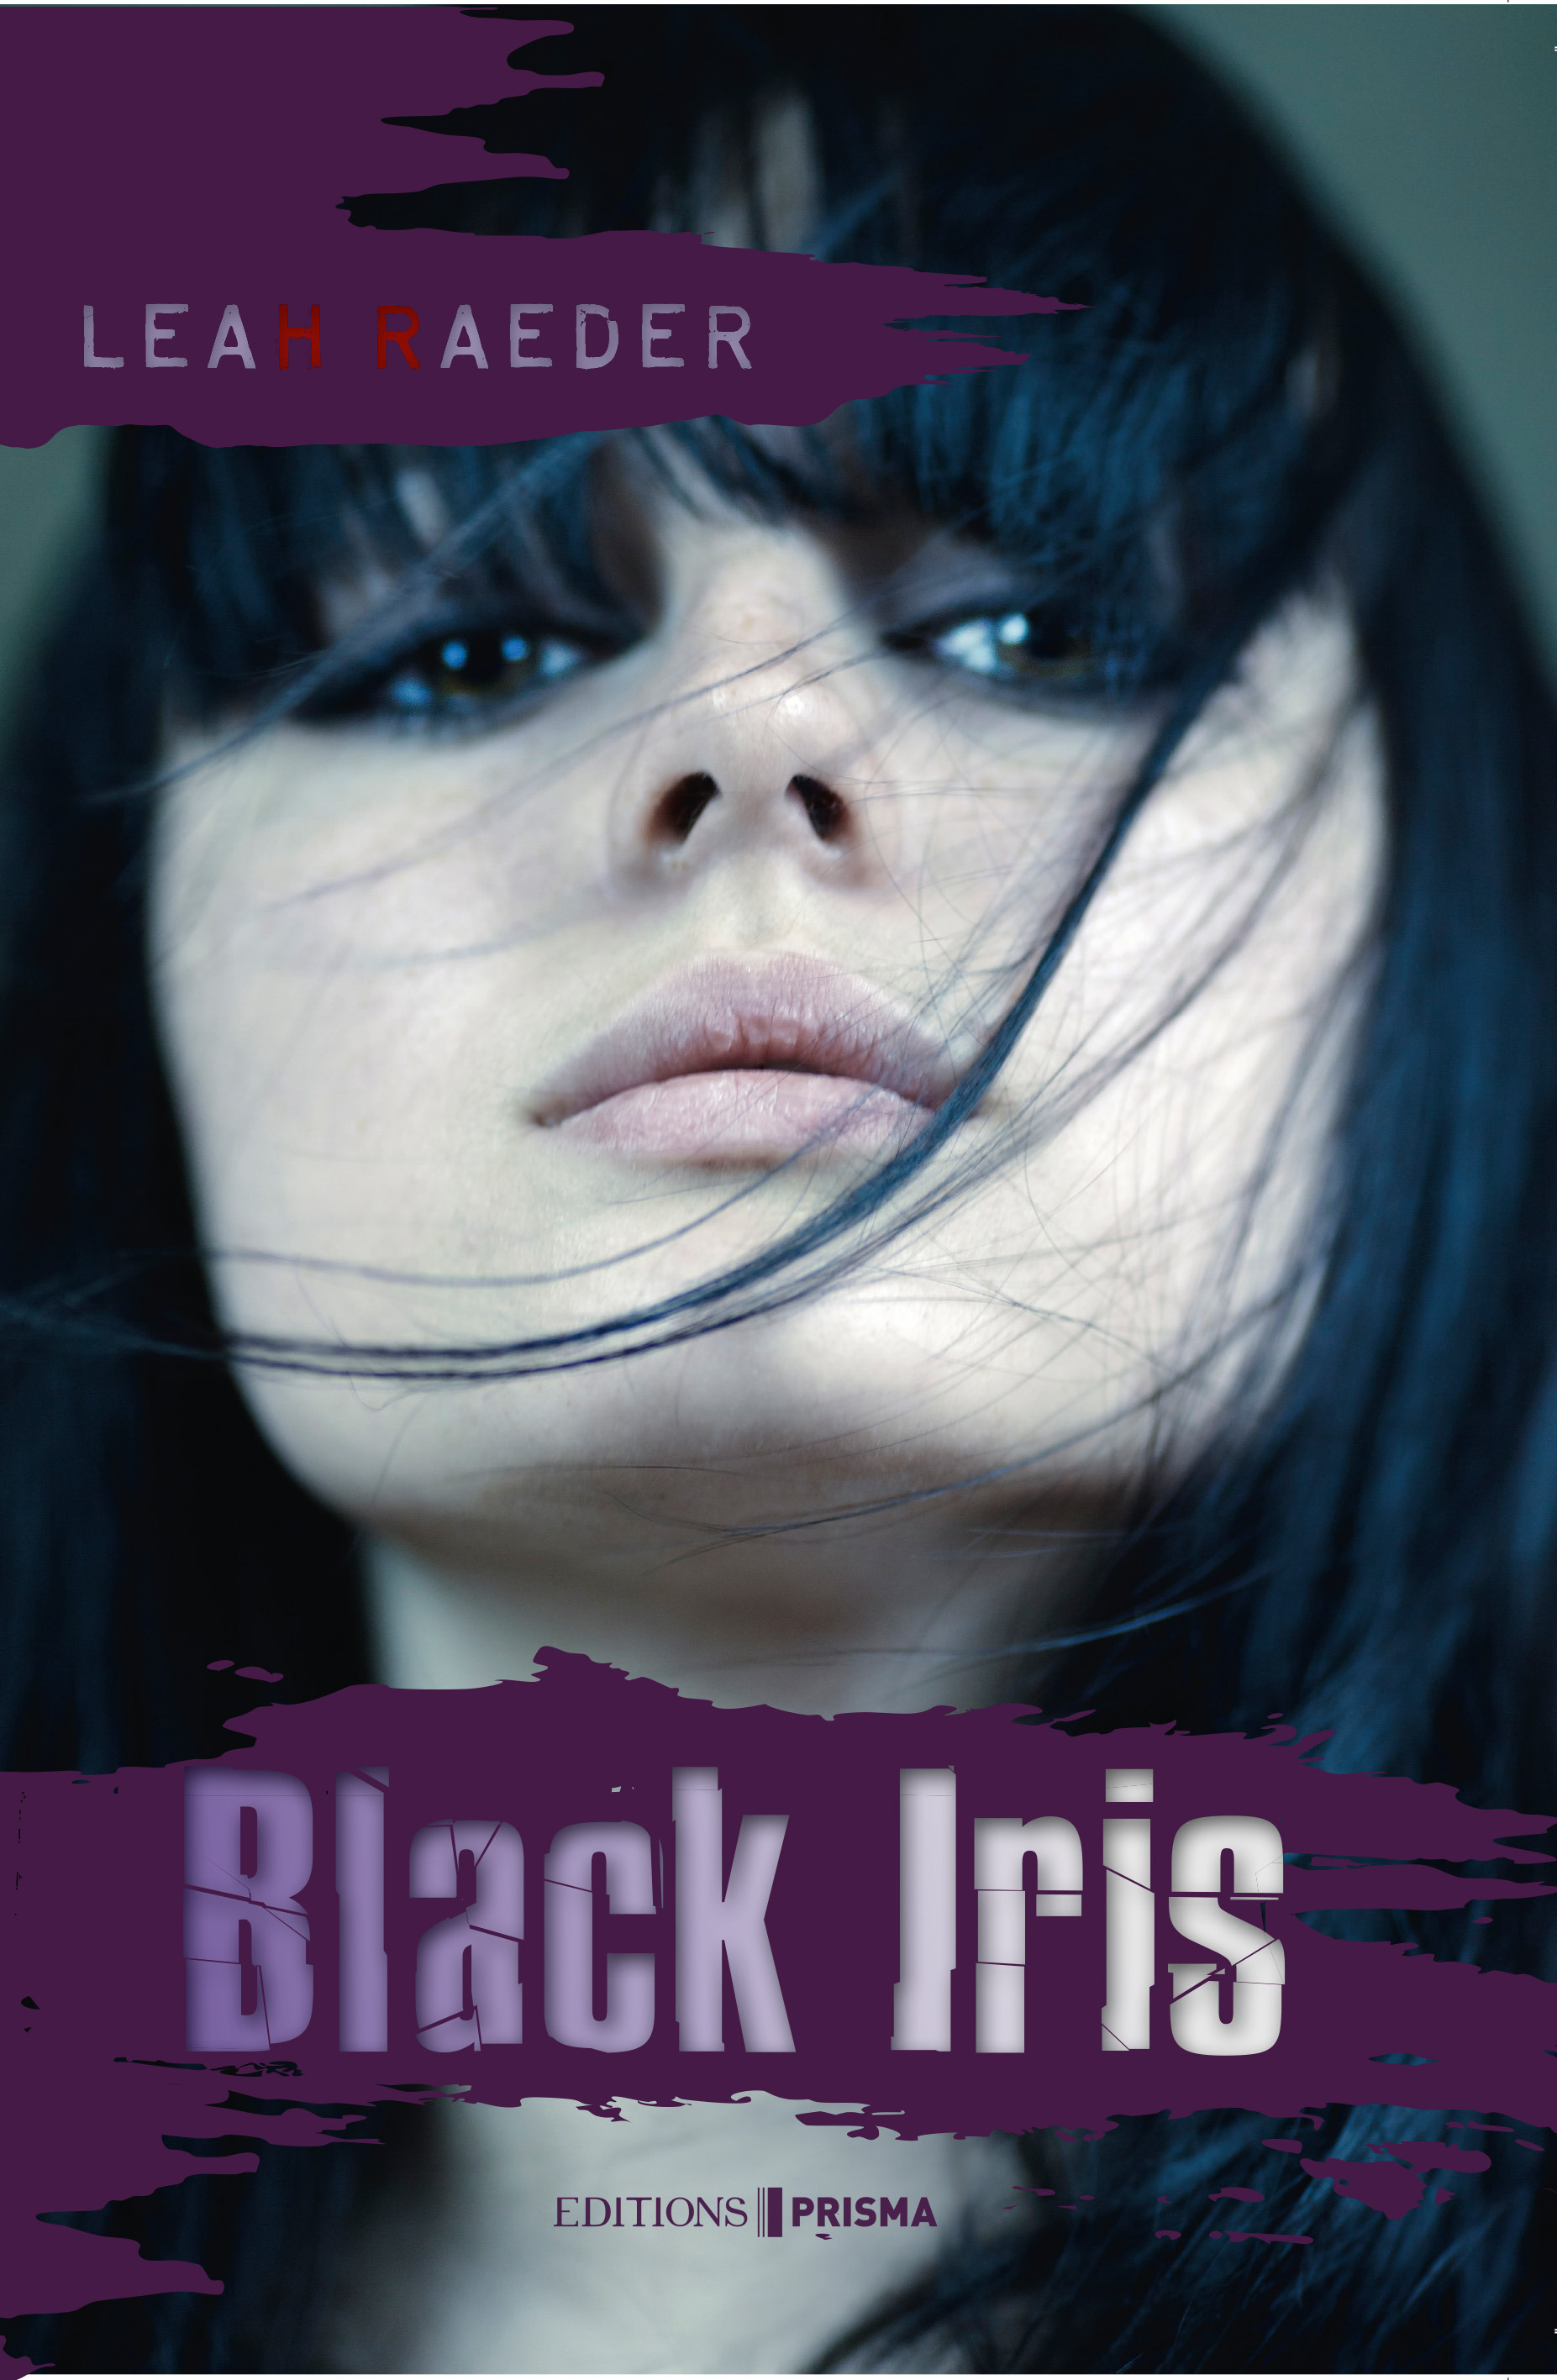 Ebook Black iris 